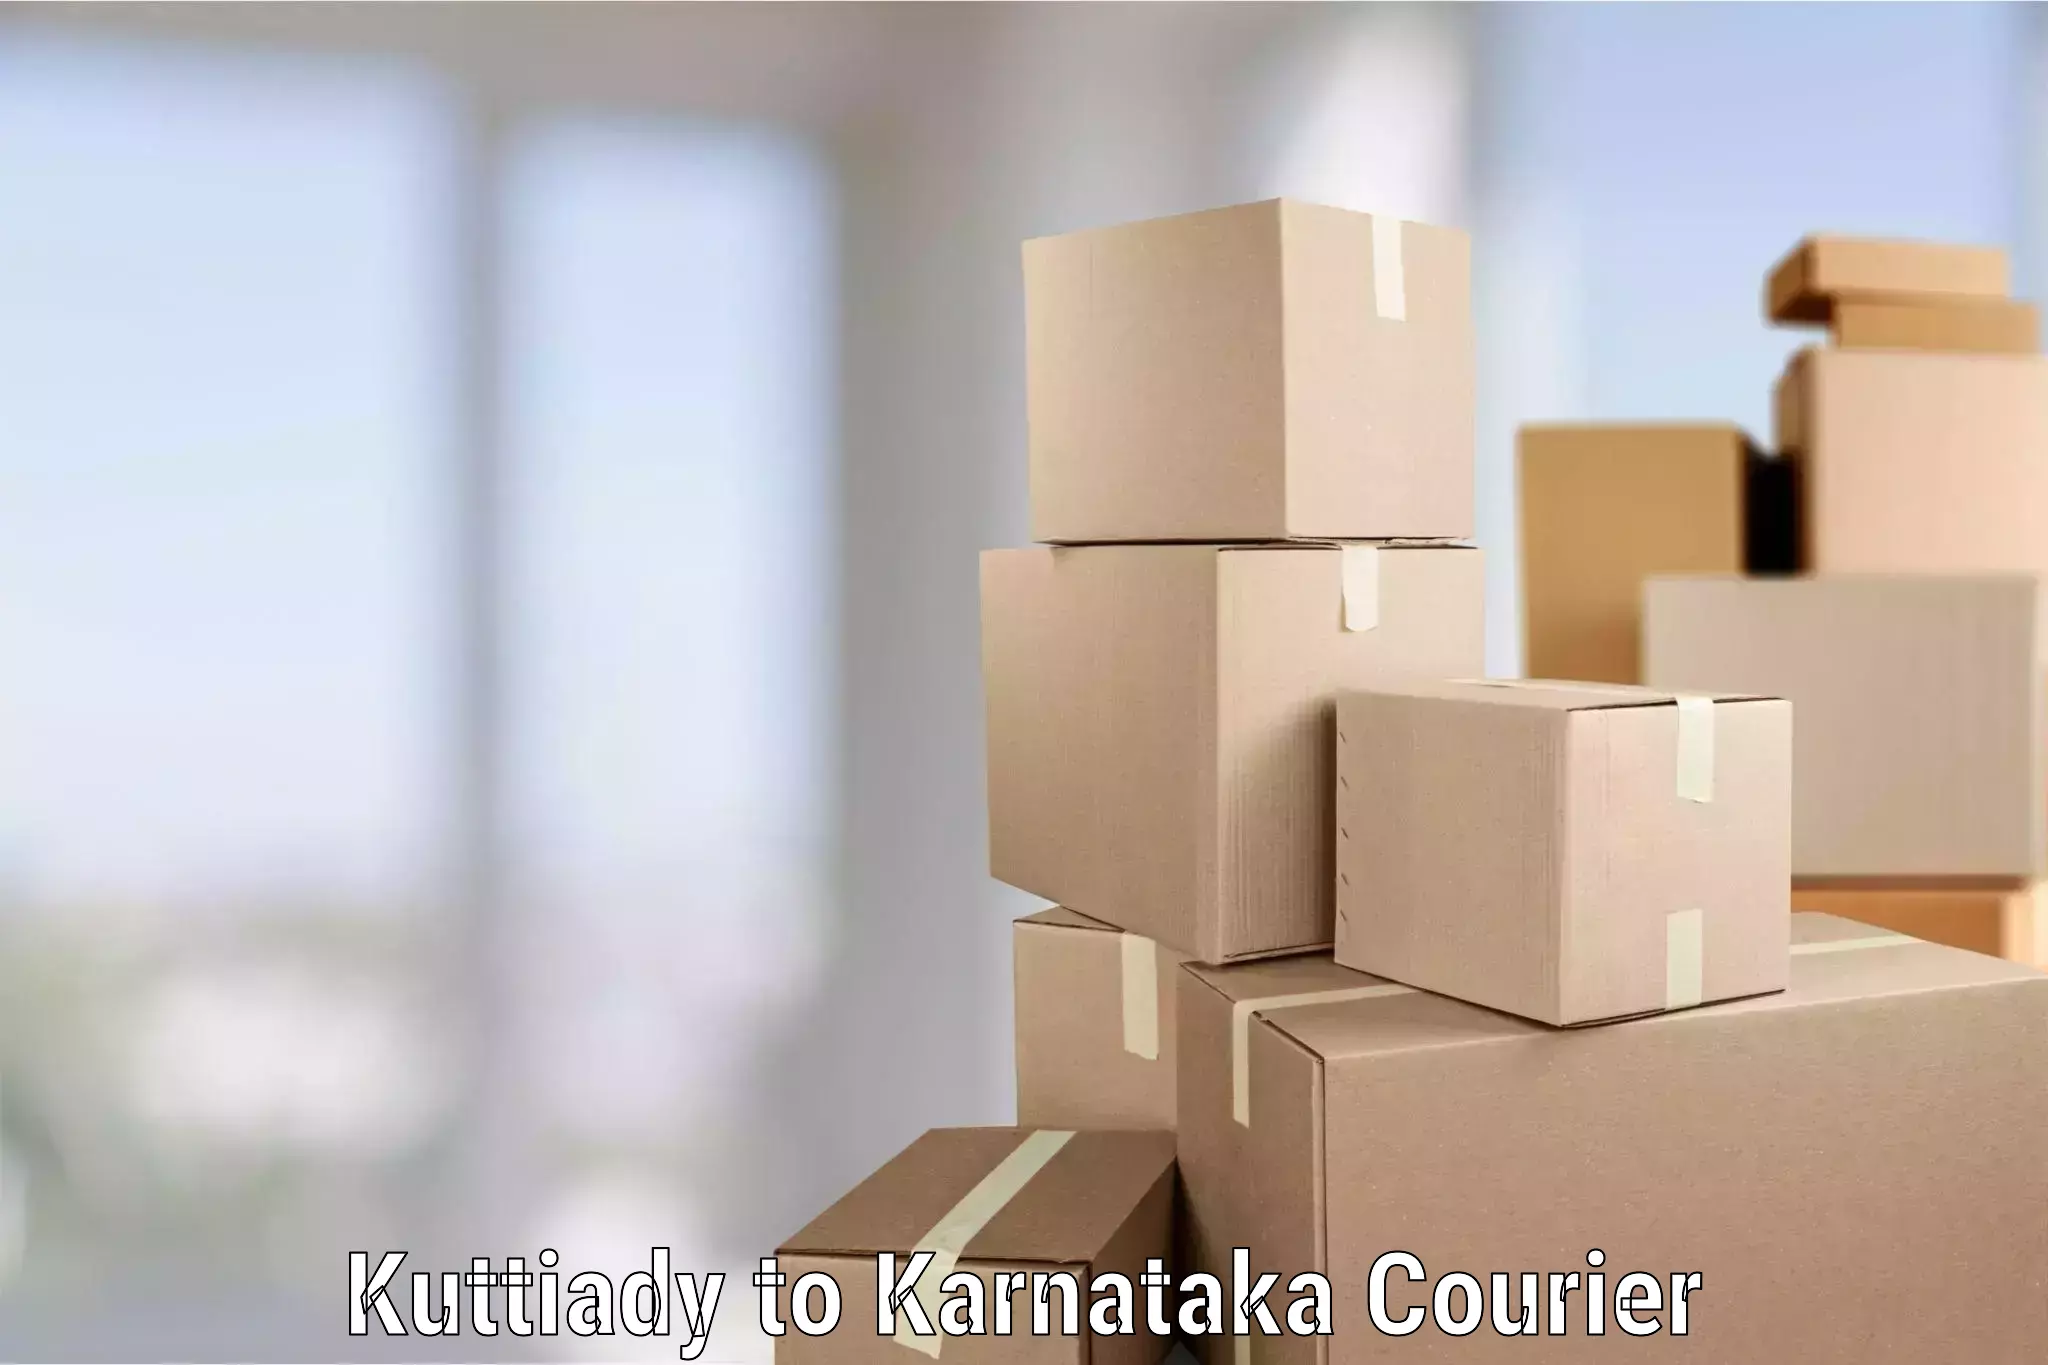 Professional moving company in Kuttiady to Yellapur